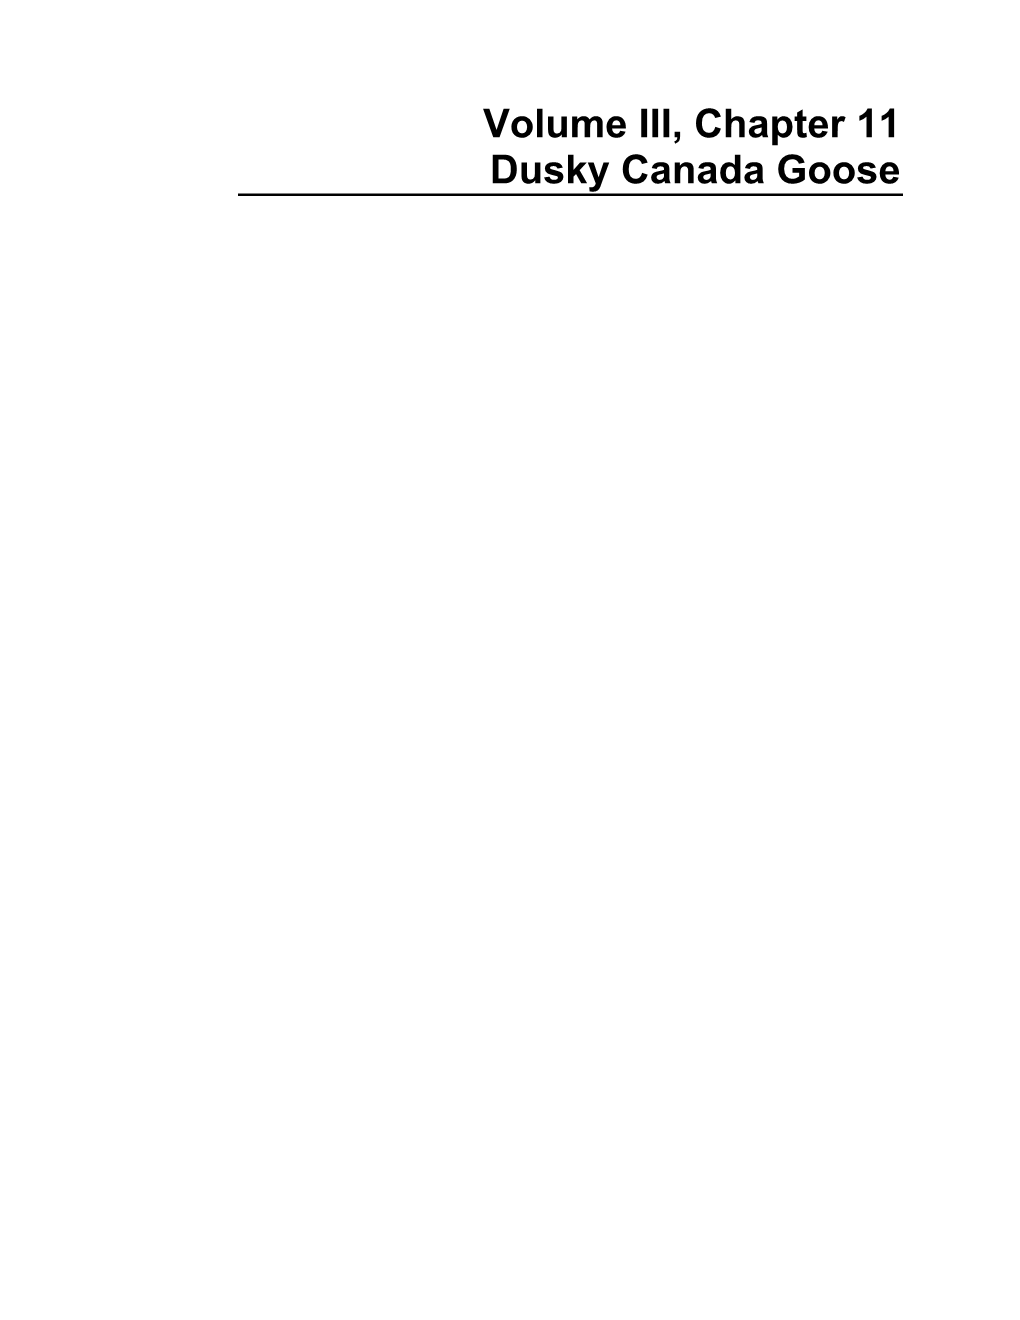 Volume III, Chapter 11 Dusky Canada Goose